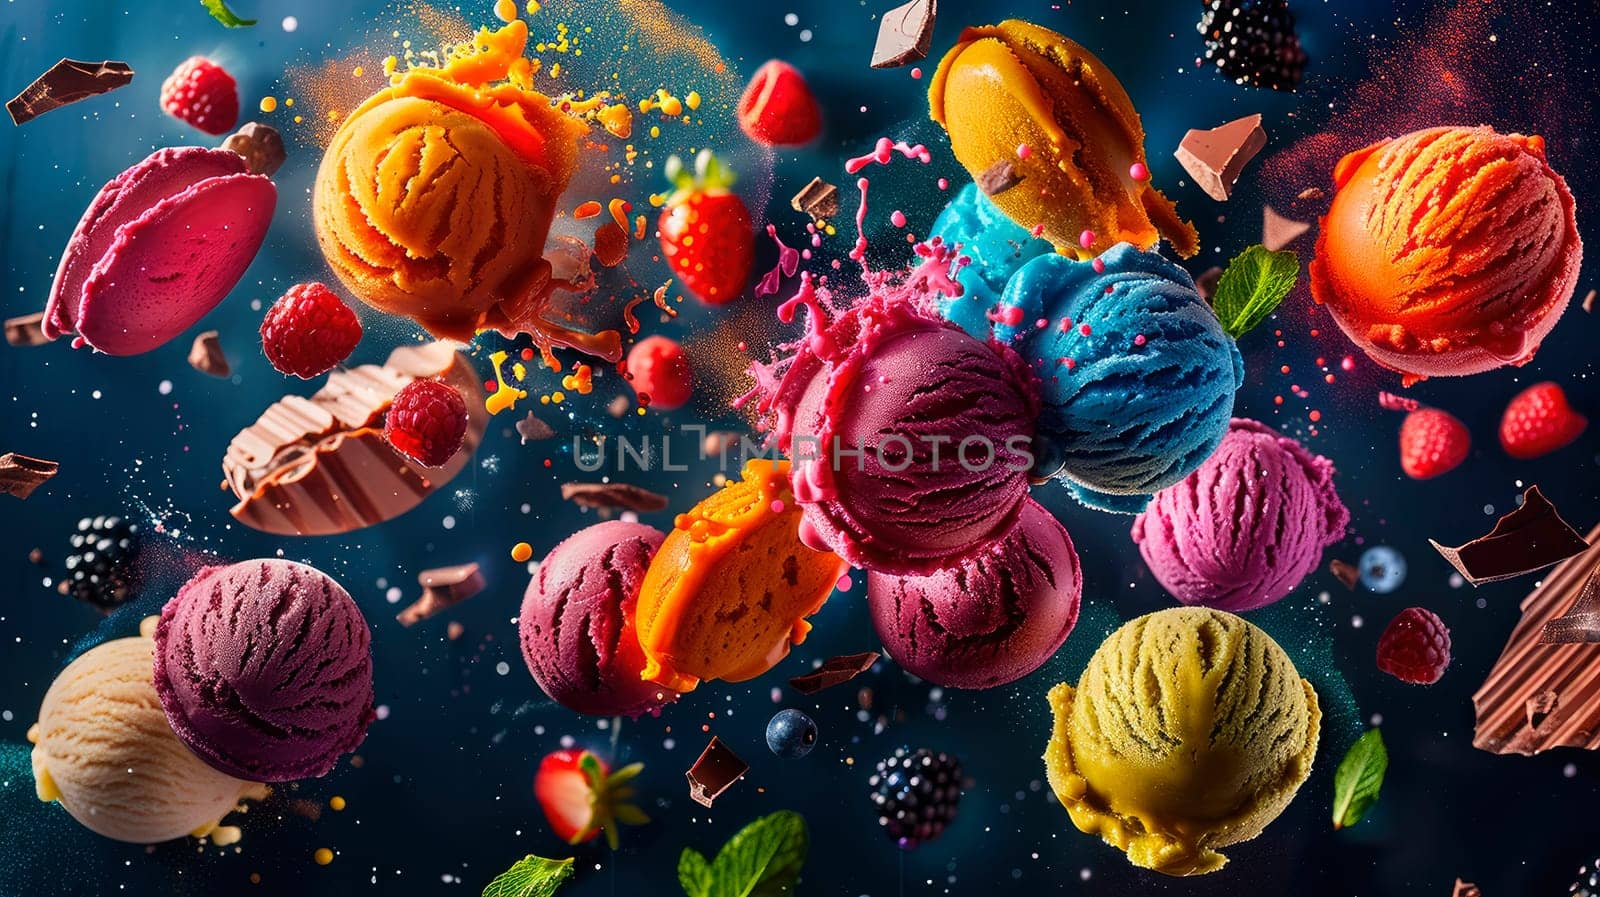 ice cream balls with berries and fruit splash. selective focus. by yanadjana